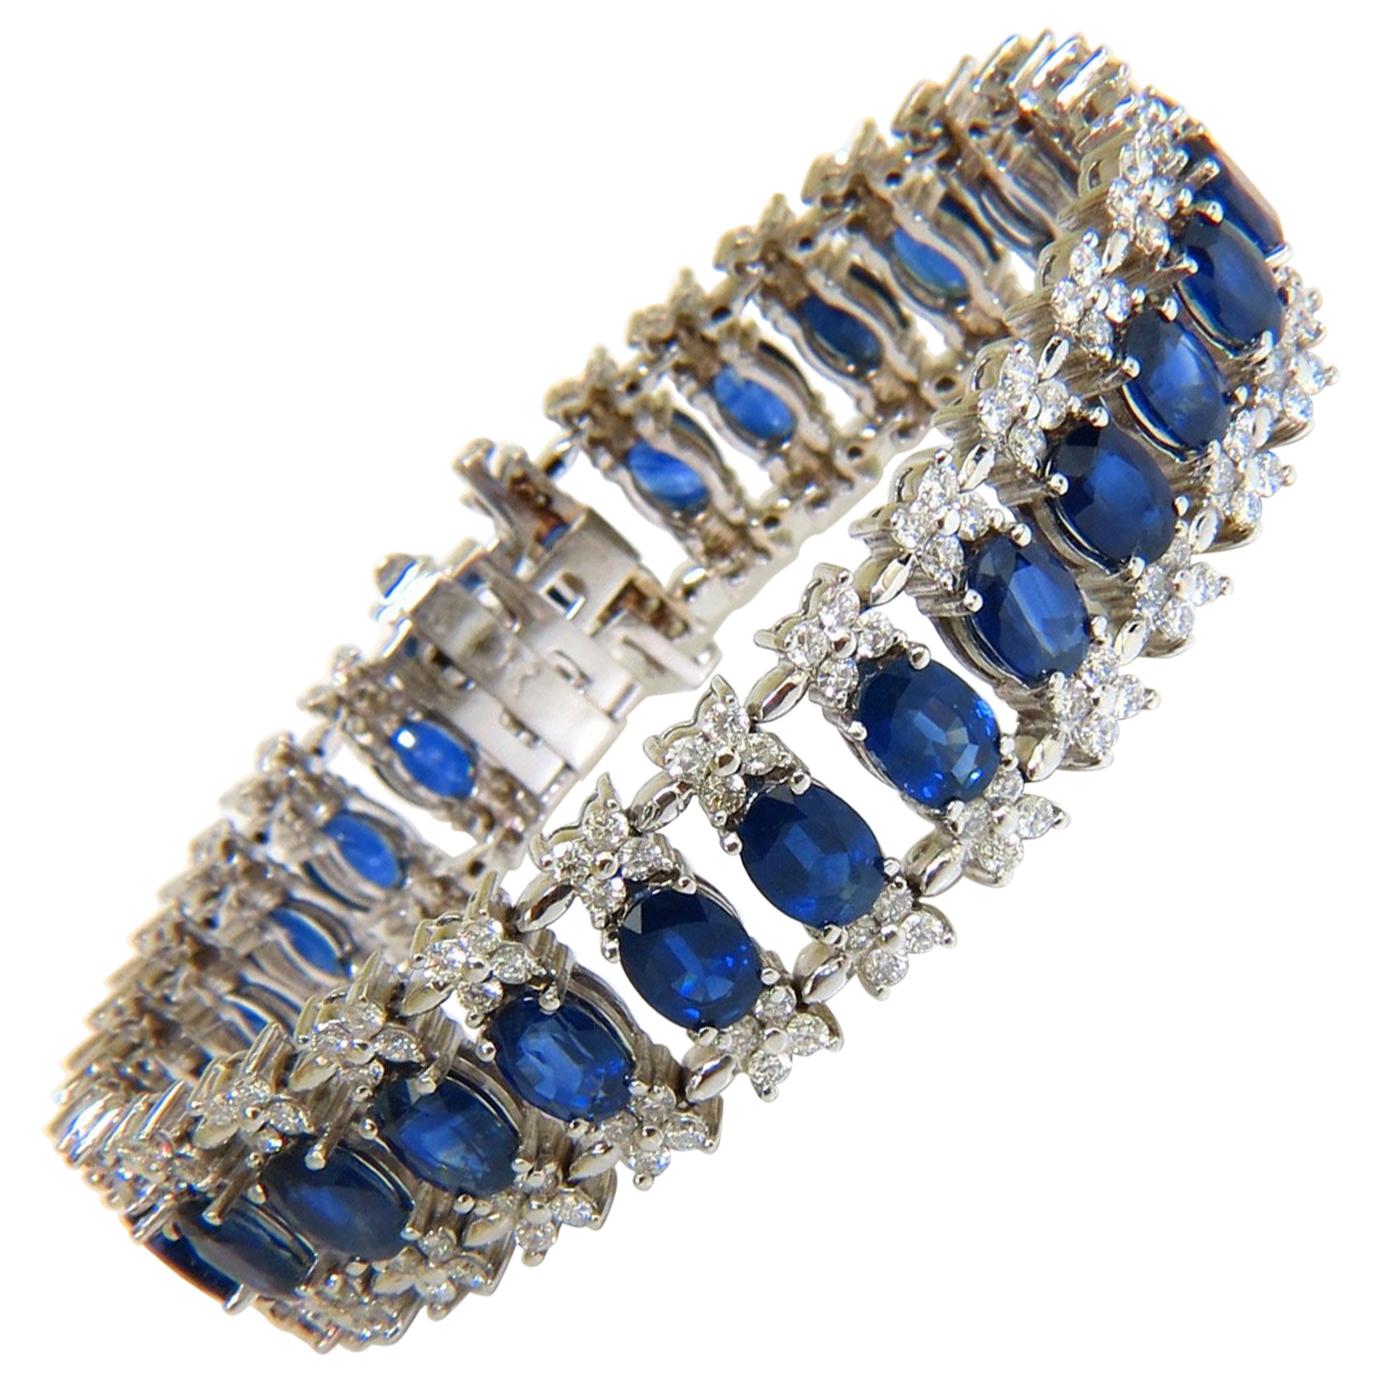 33.75 Carat Natural Gem Sapphire Diamond Bracelet Three-Row and Wide Cuff